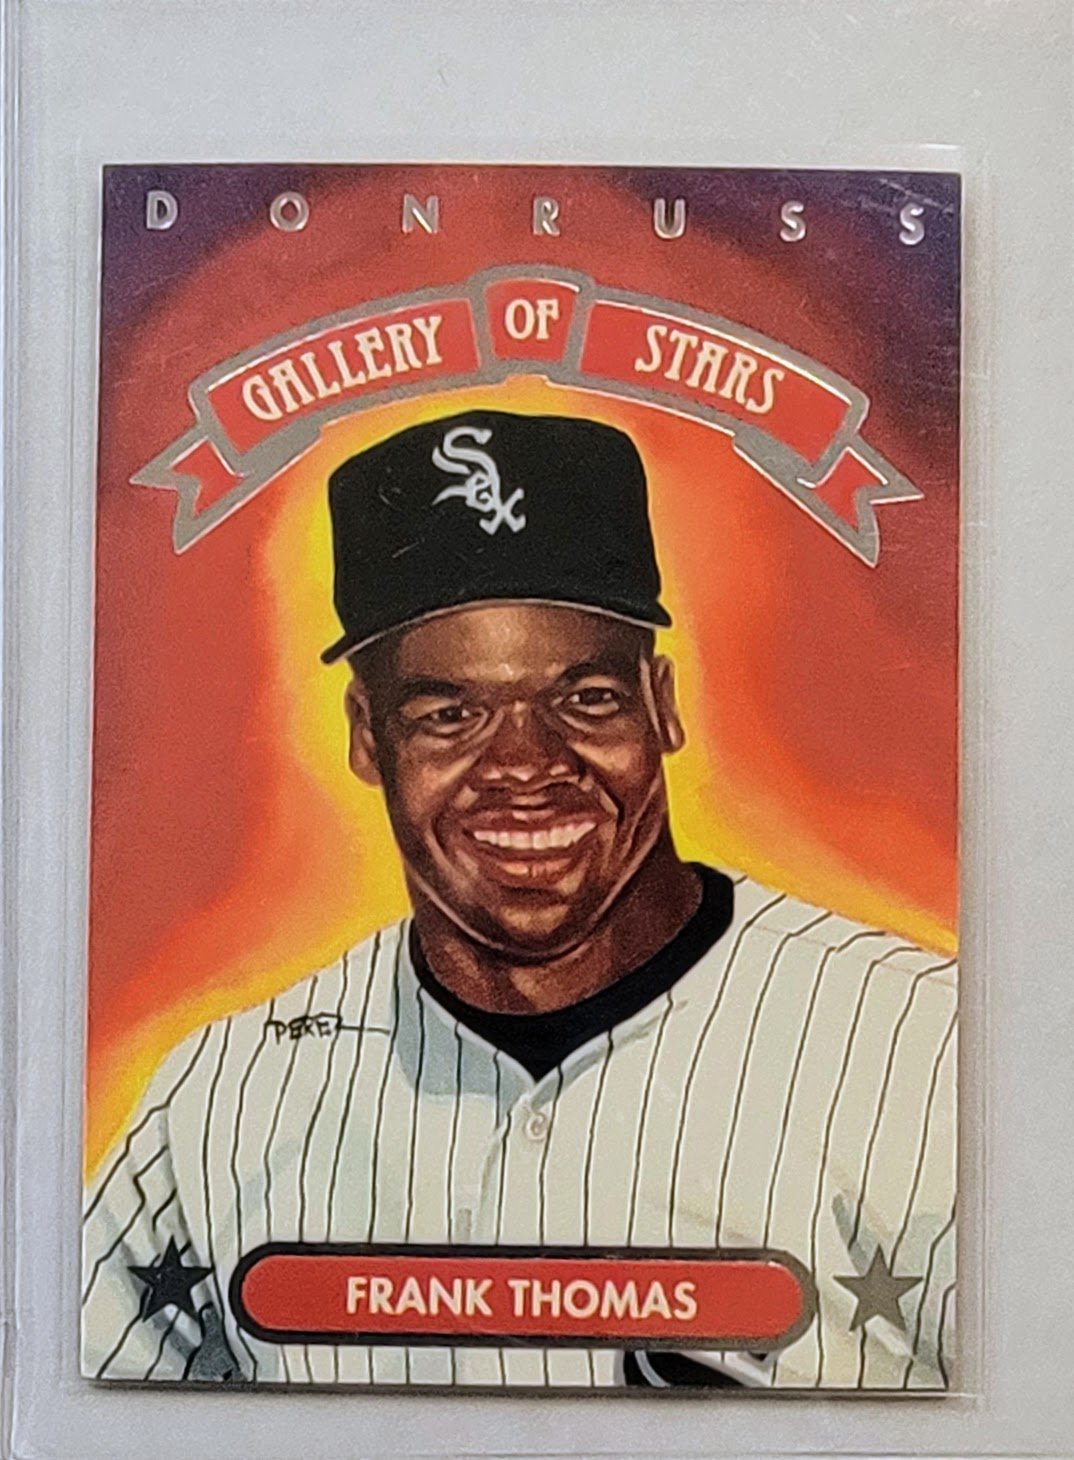 1993 Donruss Gallery of Stars Frank Thomas Baseball Trading Card TPTV